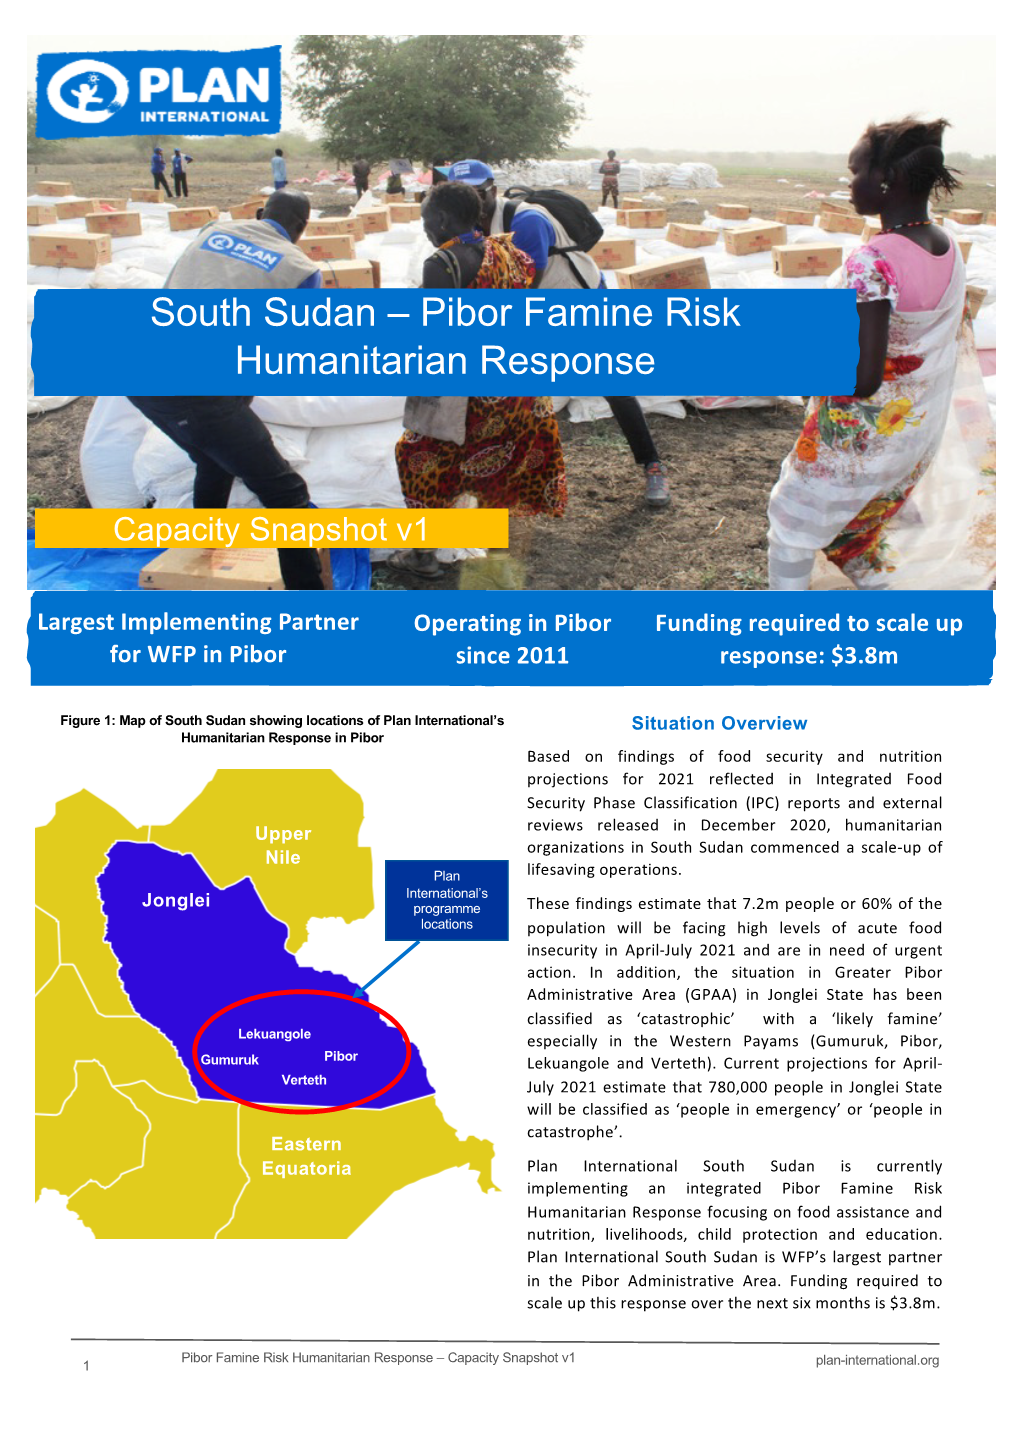 South Sudan Famine Risk Humanitarian Response Plan